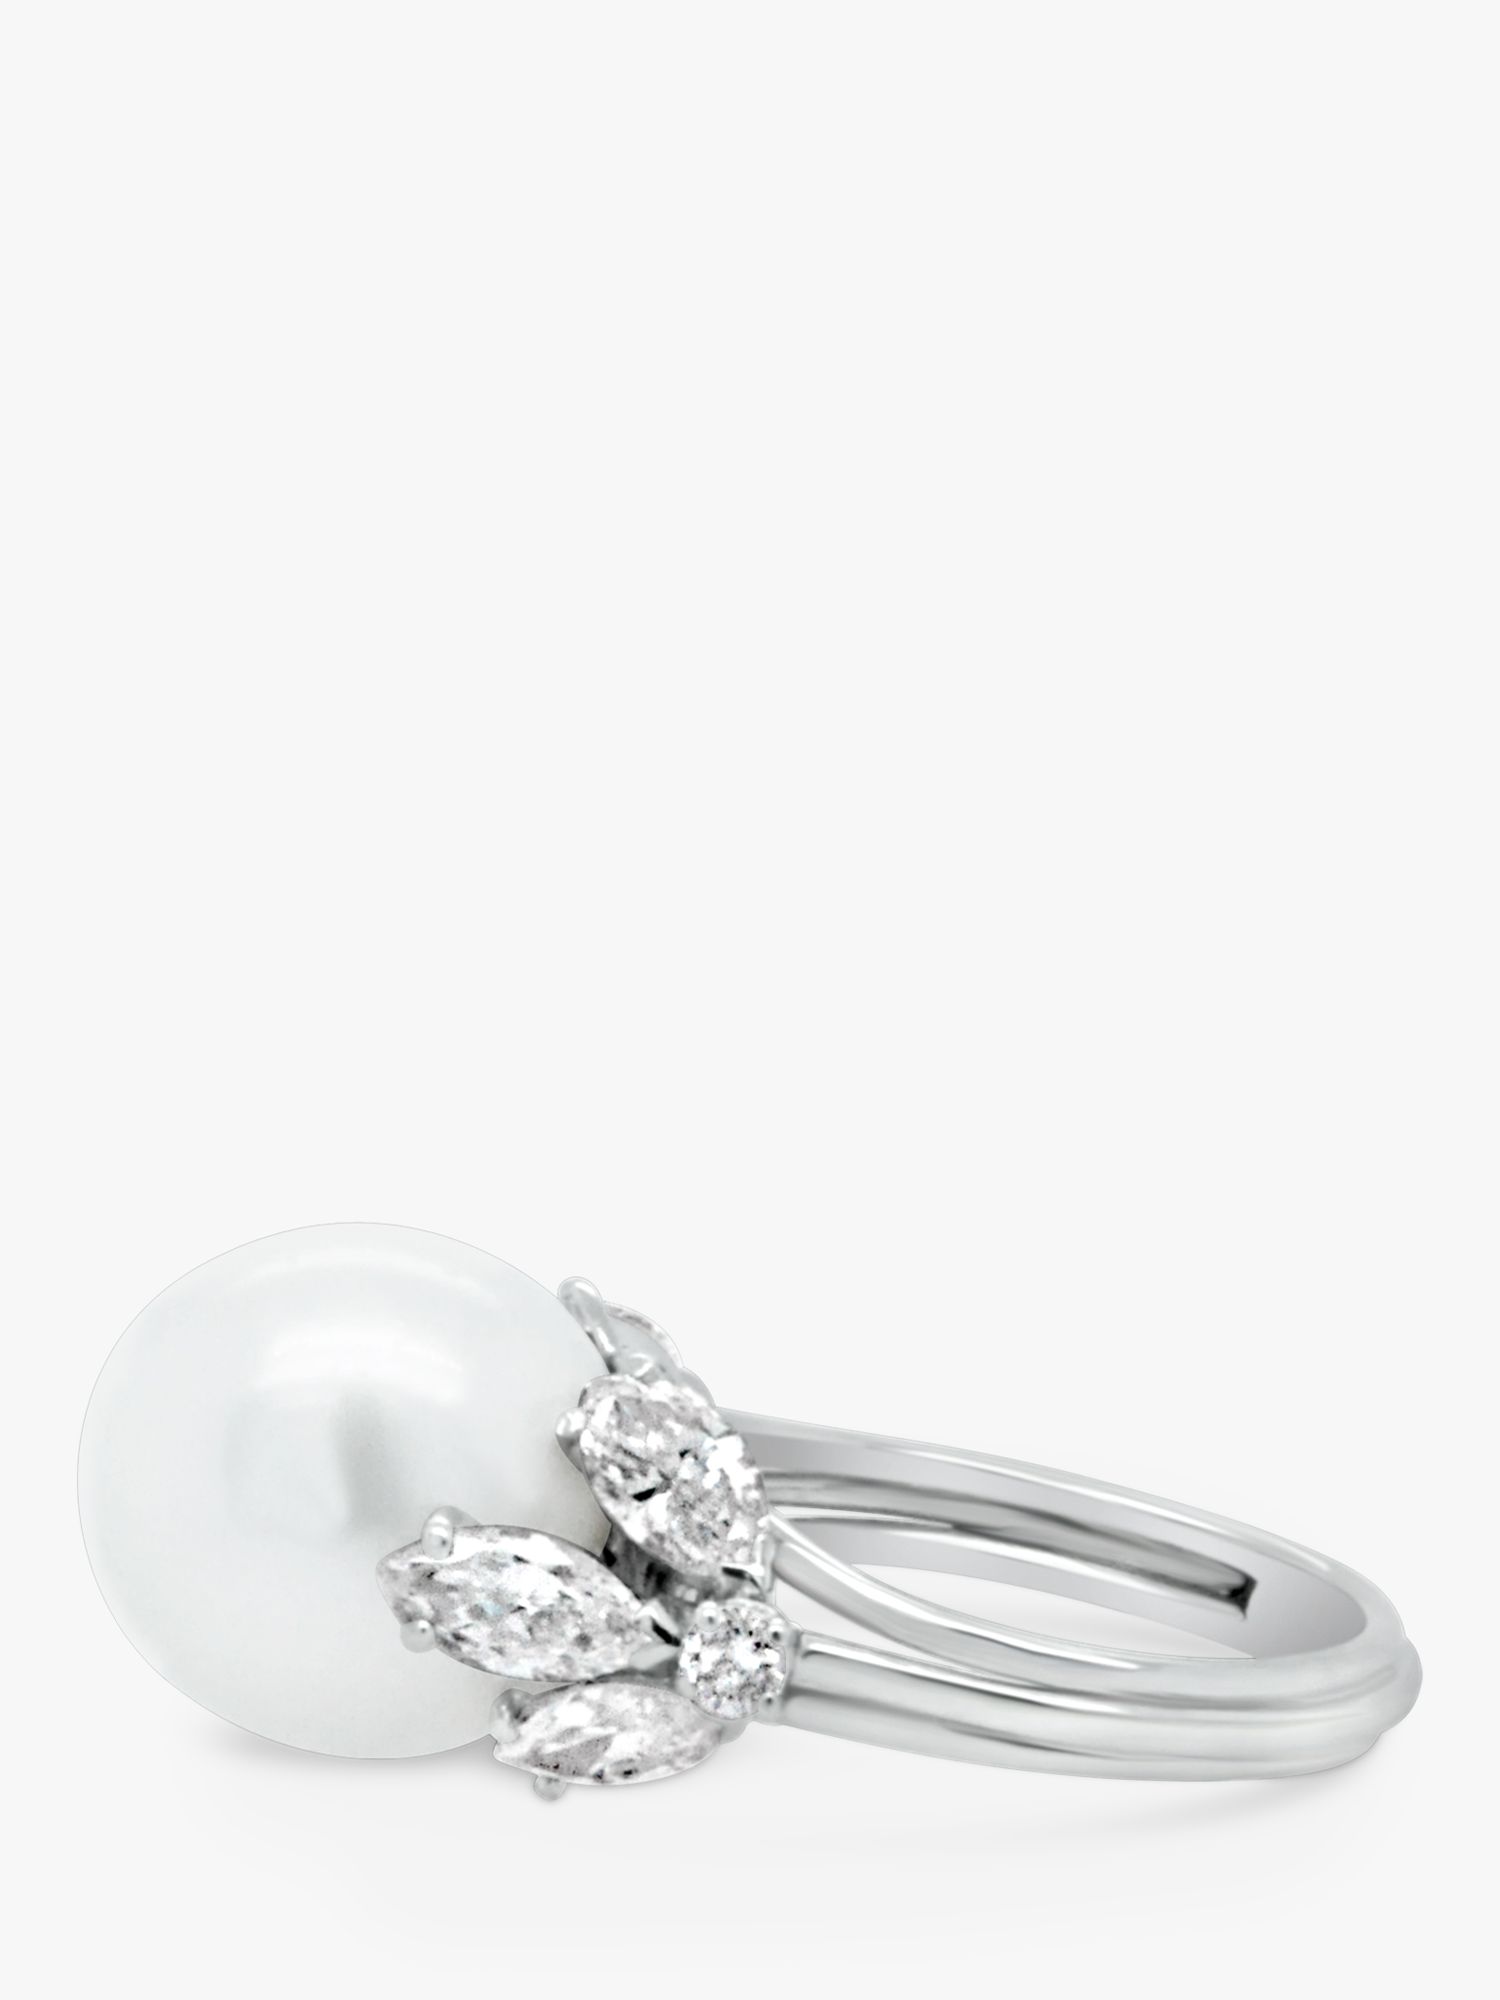 Milton & Humble Jewellery Second Hand Platinum Pearl & Diamond Cocktail Ring, Dated Edinburgh 2019